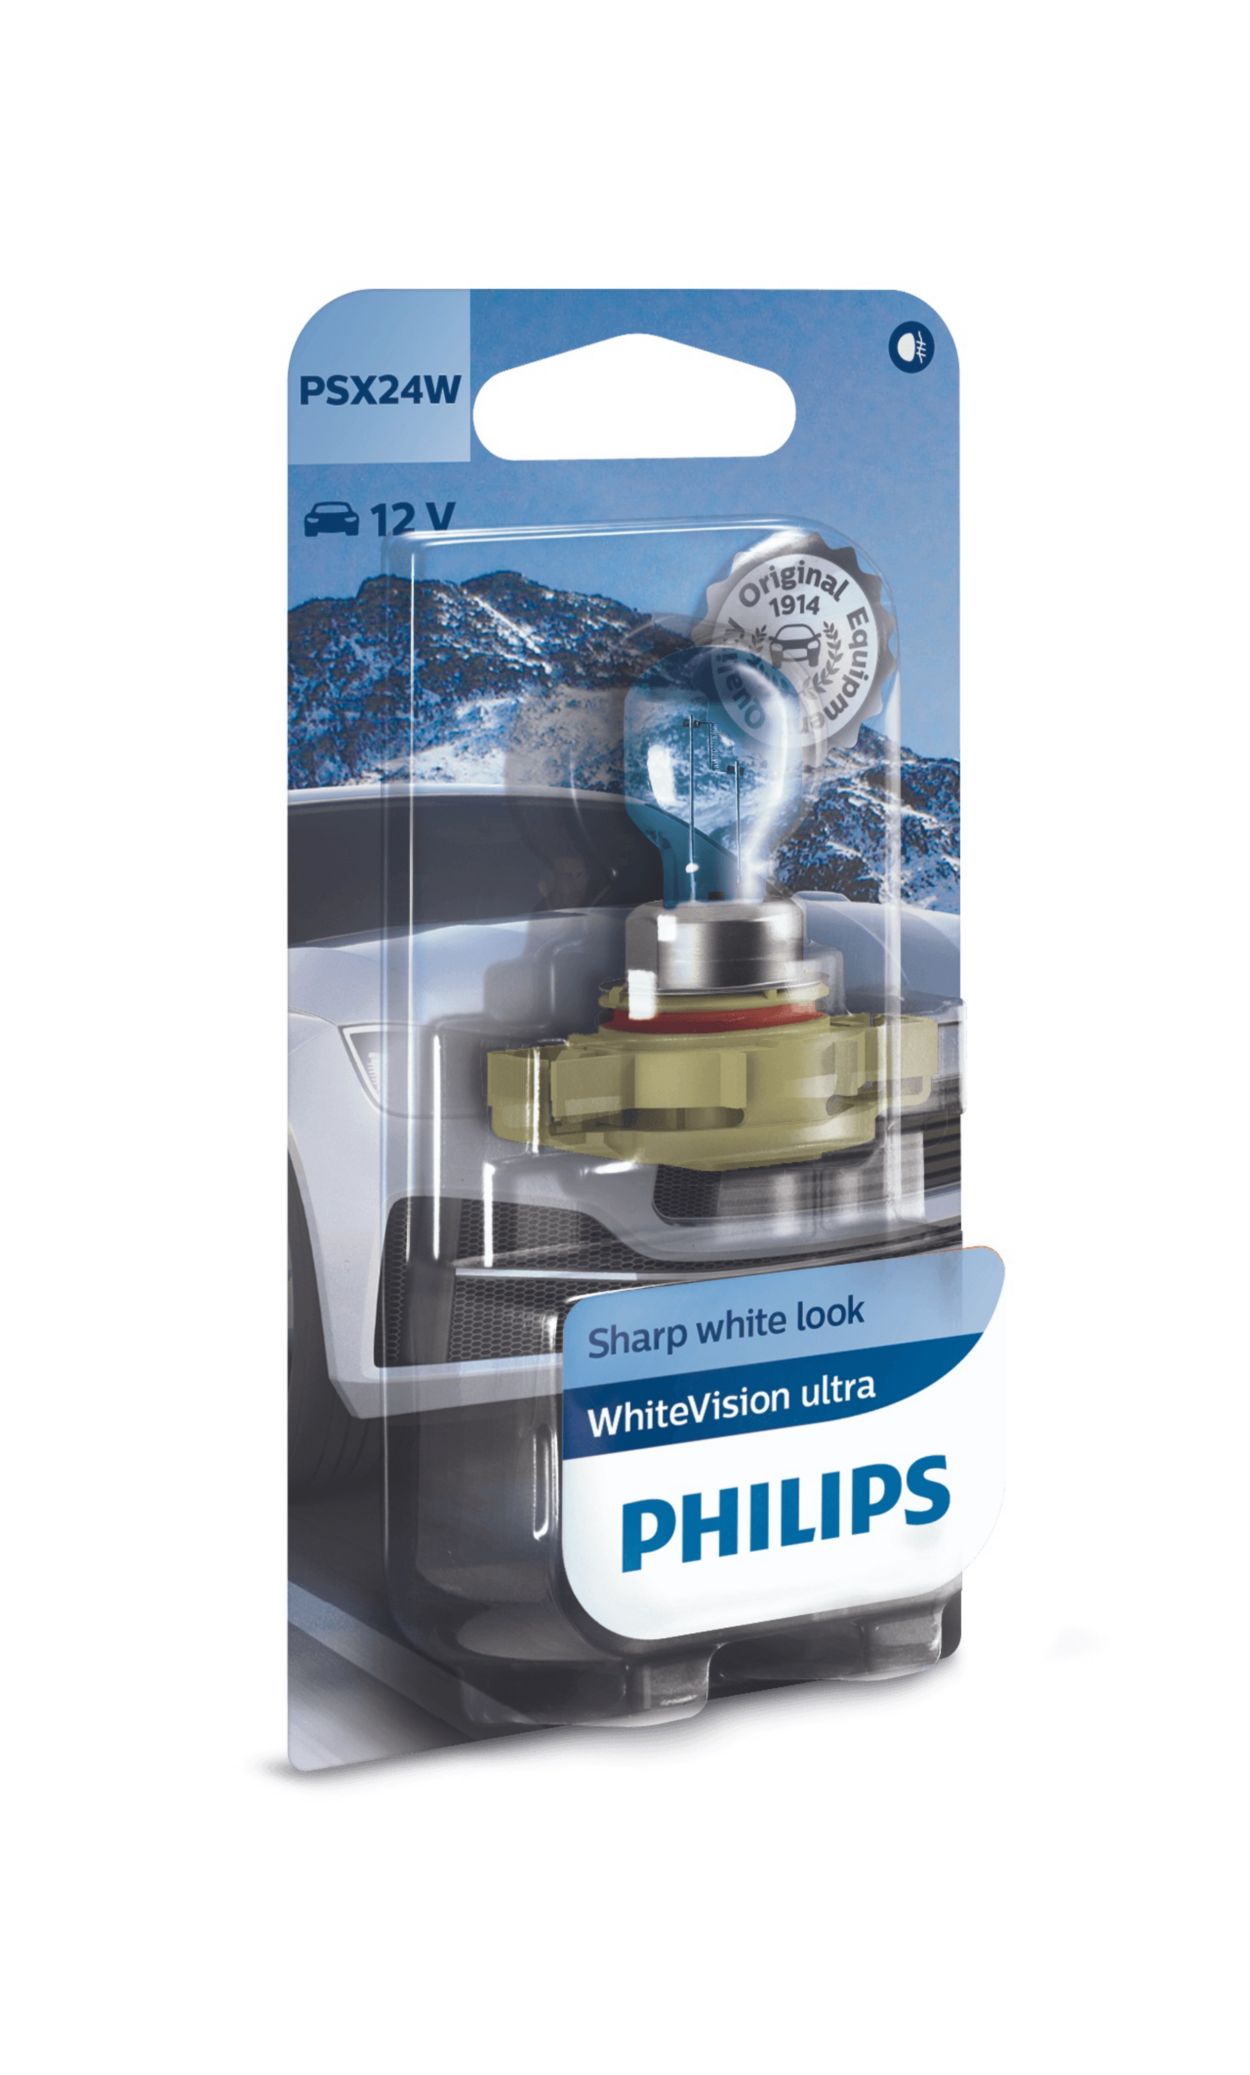 Philips WhiteVision Vs. Philips Blue Vision Ultra